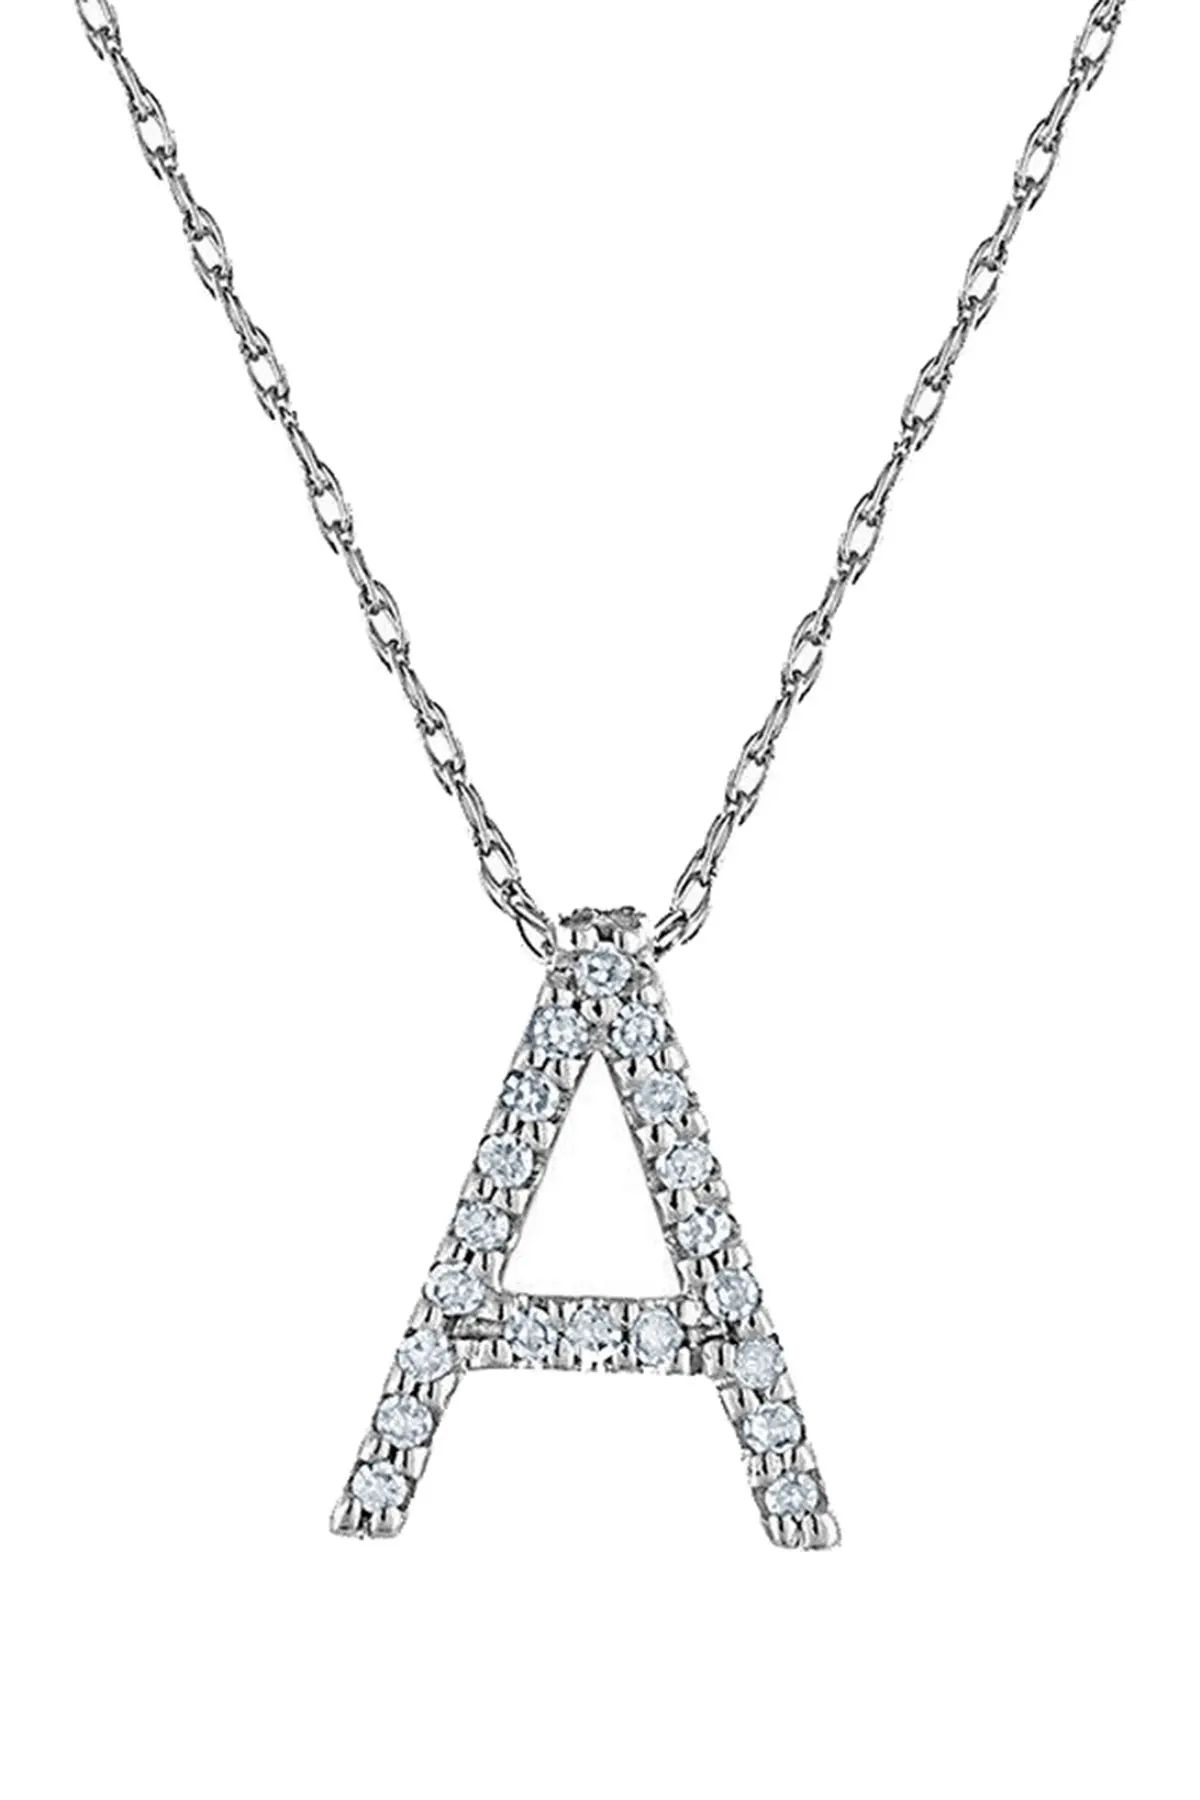 Suzy Levian Diamond & 14K White Gold Letter Pendant Necklace - 0.10ctw at Nordstrom Rack | Nordstrom Rack